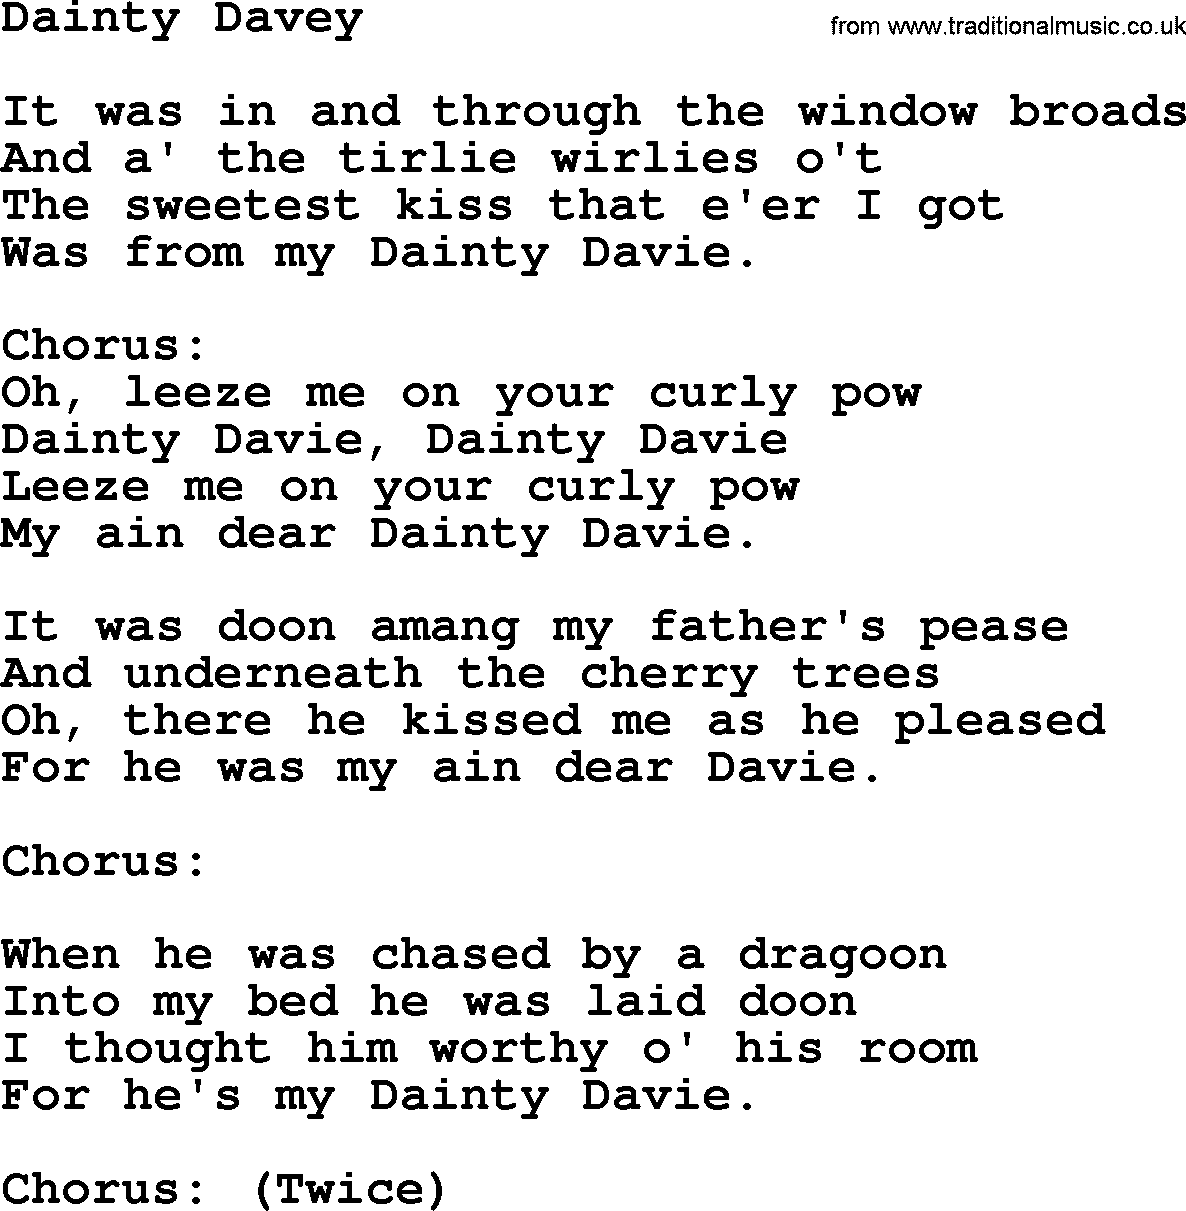 The Dubliners song: Dainty Davey, lyrics